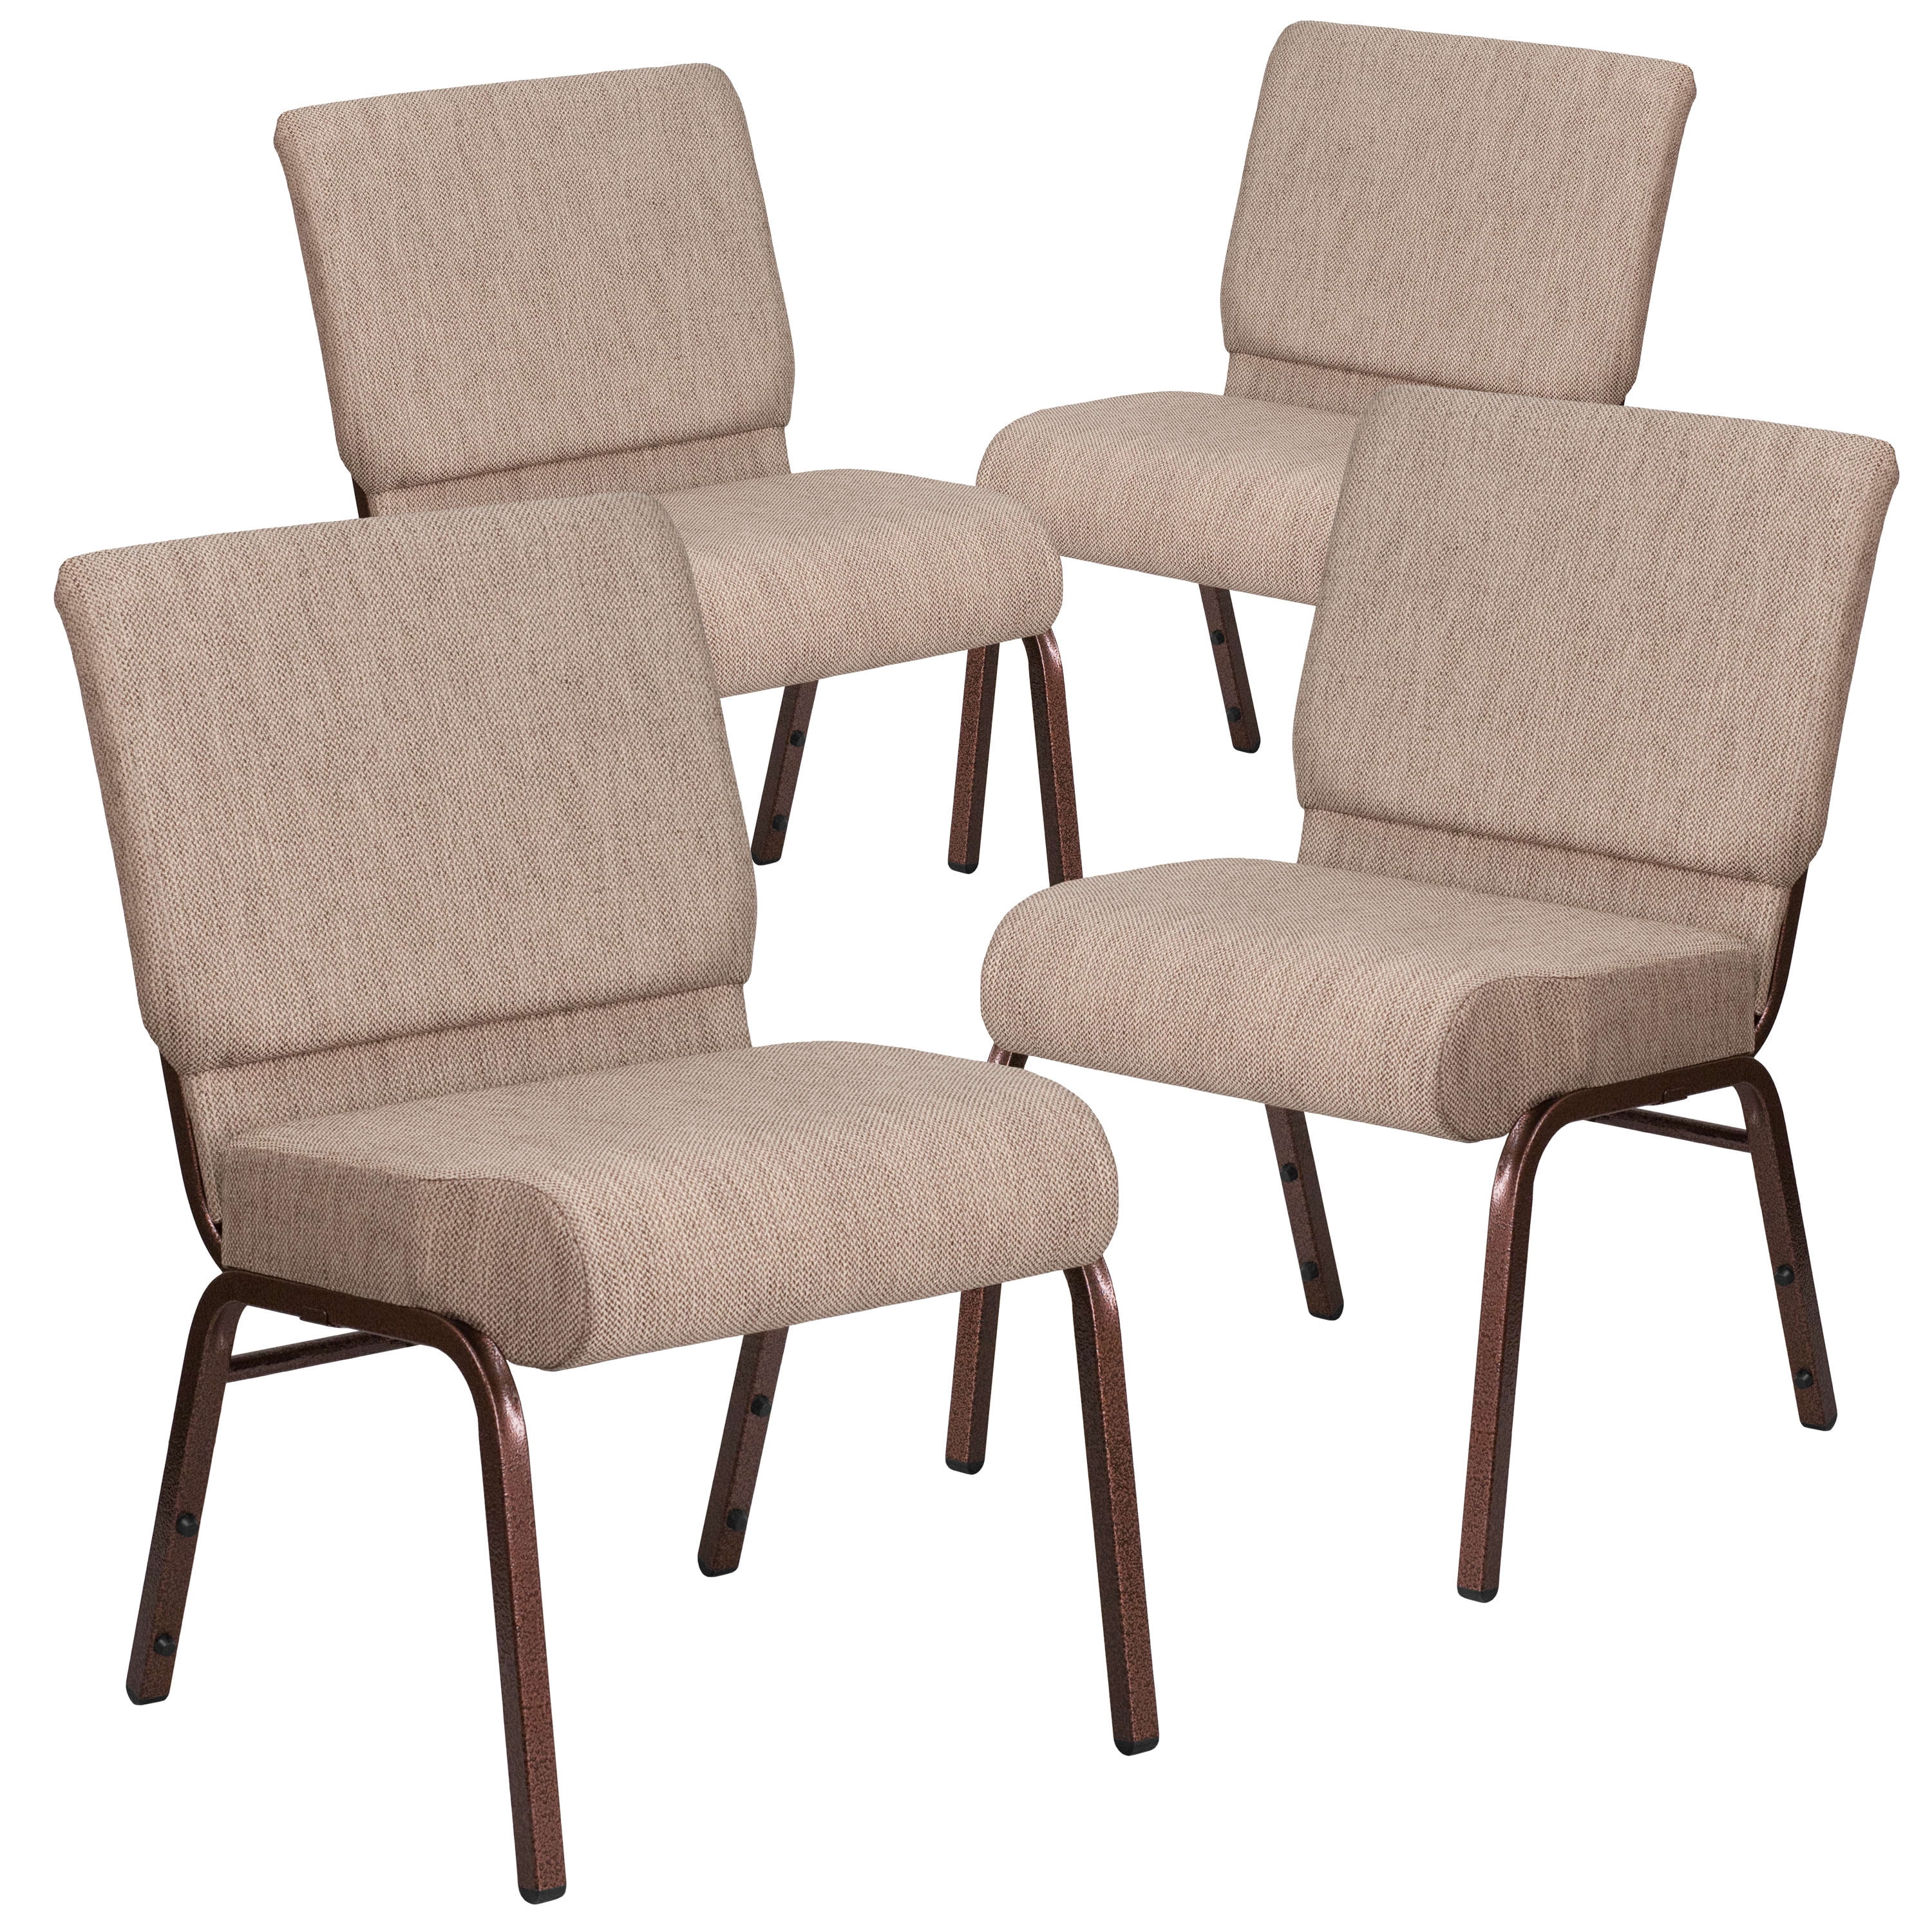 Copper Vein Frame HERCULES Series 21W Church Chair in Beige Fabric with Book Rack Flash Furniture 4 Pk 